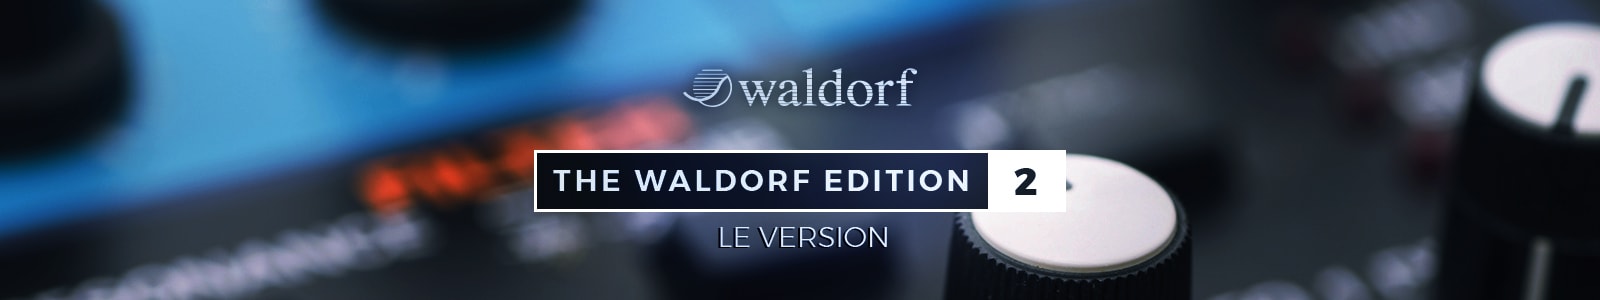 Waldorf 2 LE